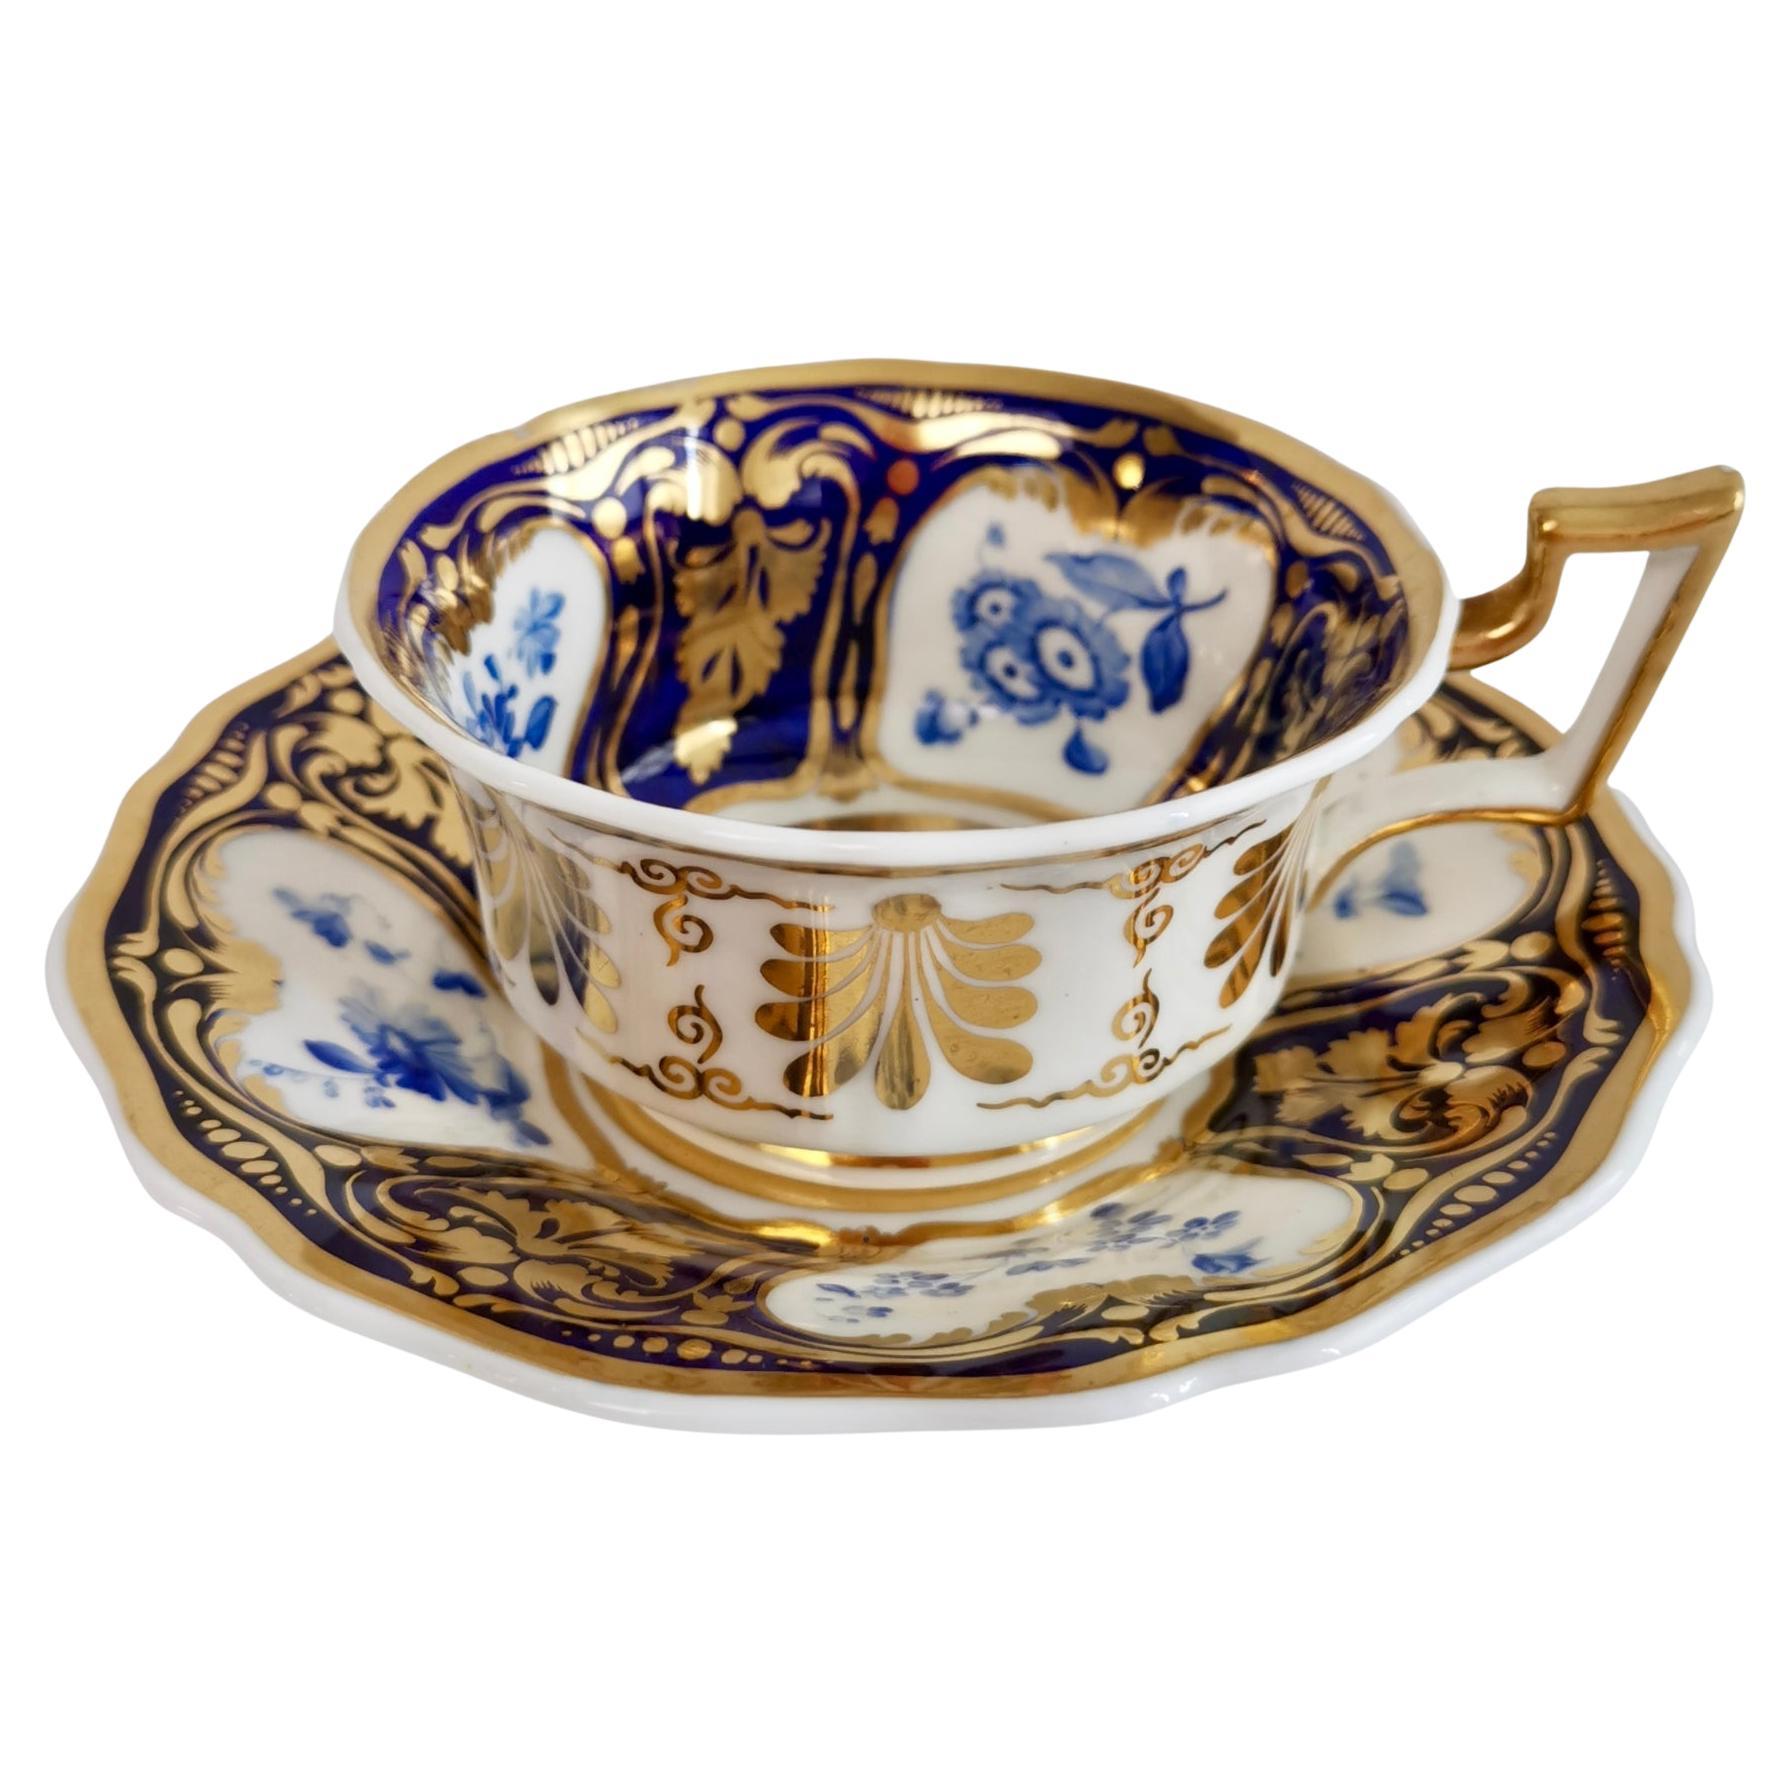 Ridgway Porcelain Teacup and Saucer, Blue Flowers and Gilt, Regency, Ca 1825